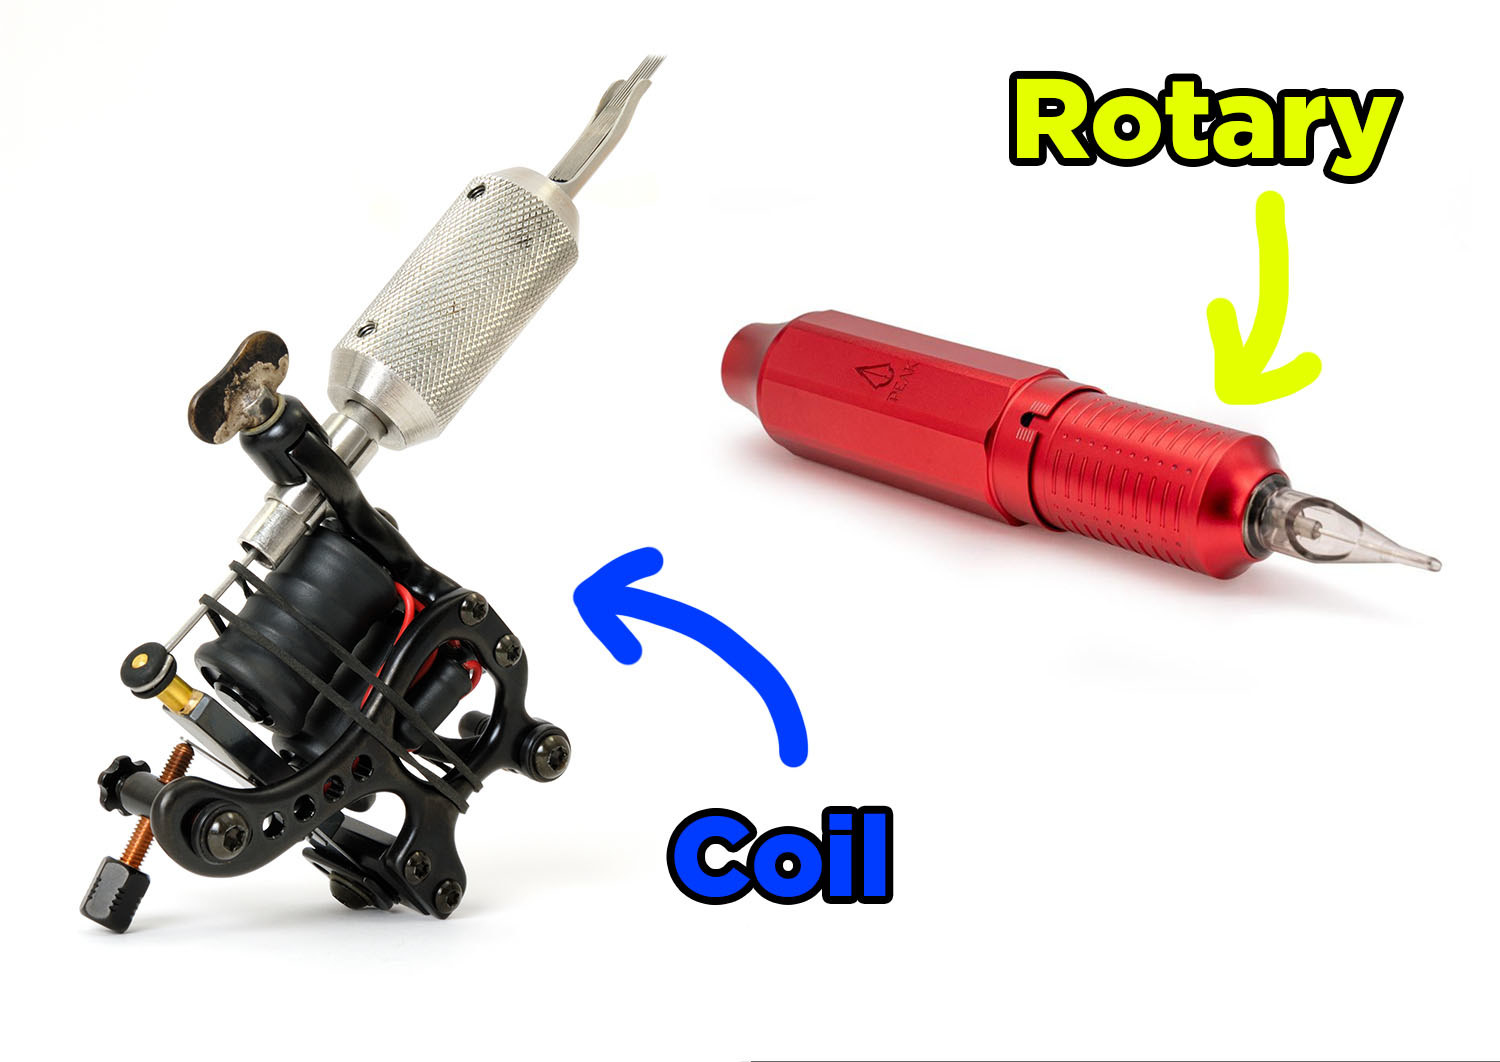 A coil and rotary tattoo machine